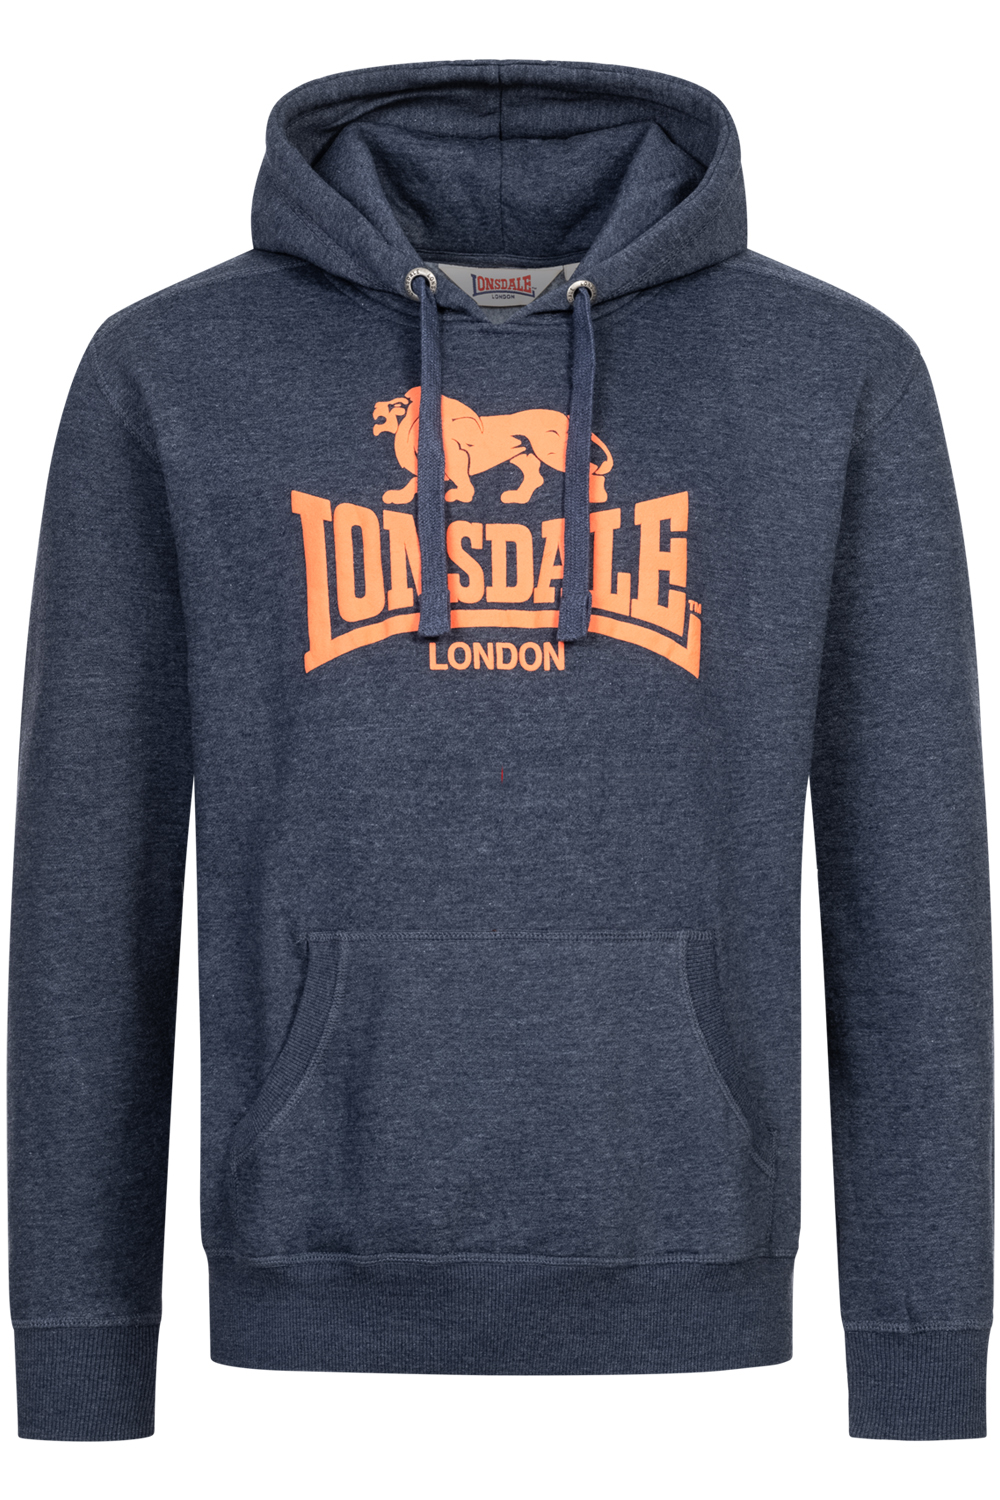 Lonsdale Men's Hooded Sweatshirt Regular Fit